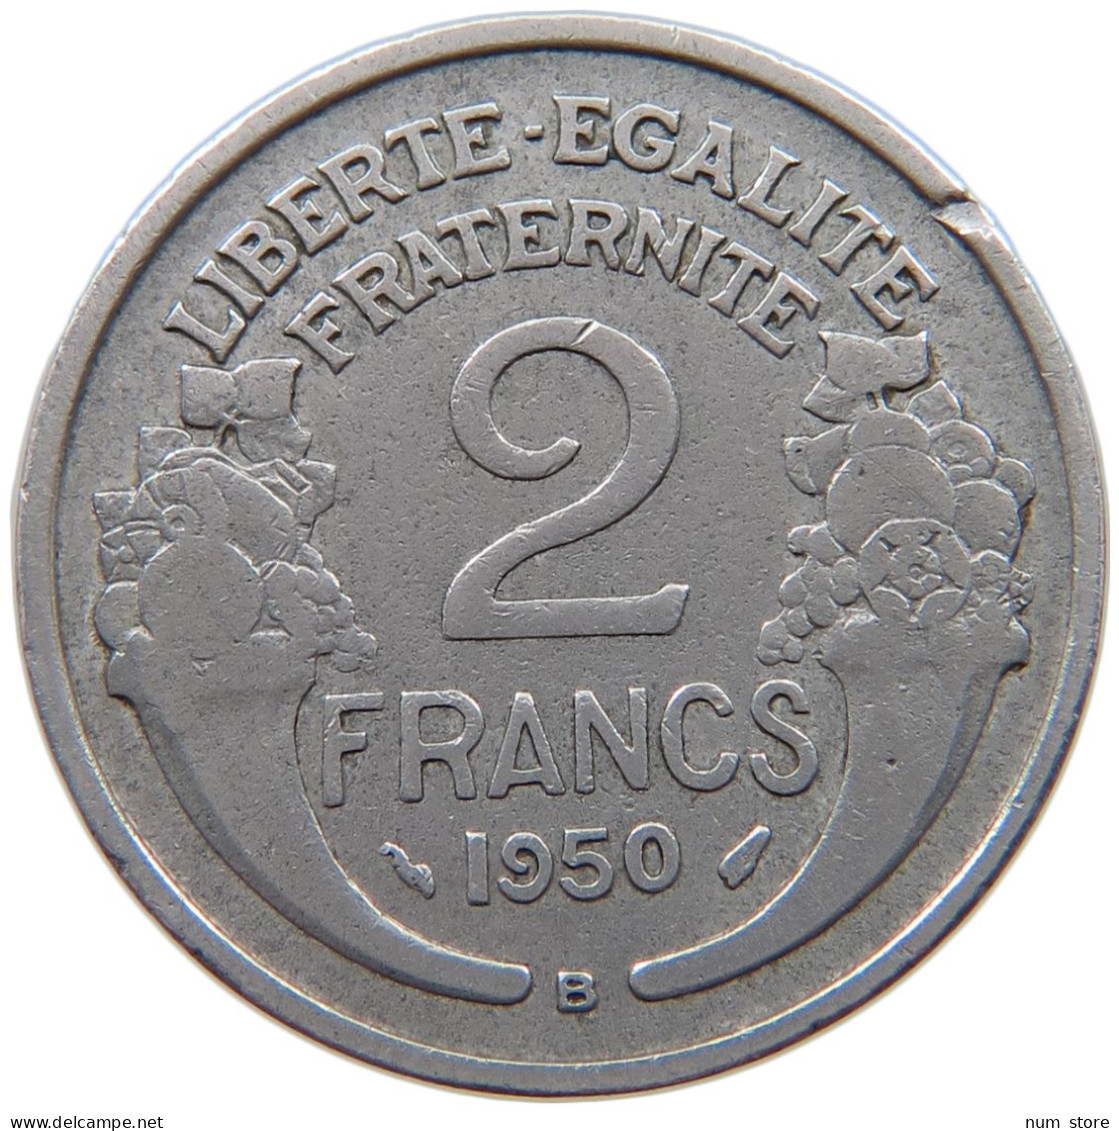 FRANCE 2 FRANCS 1950 B #a060 0179 - 2 Francs